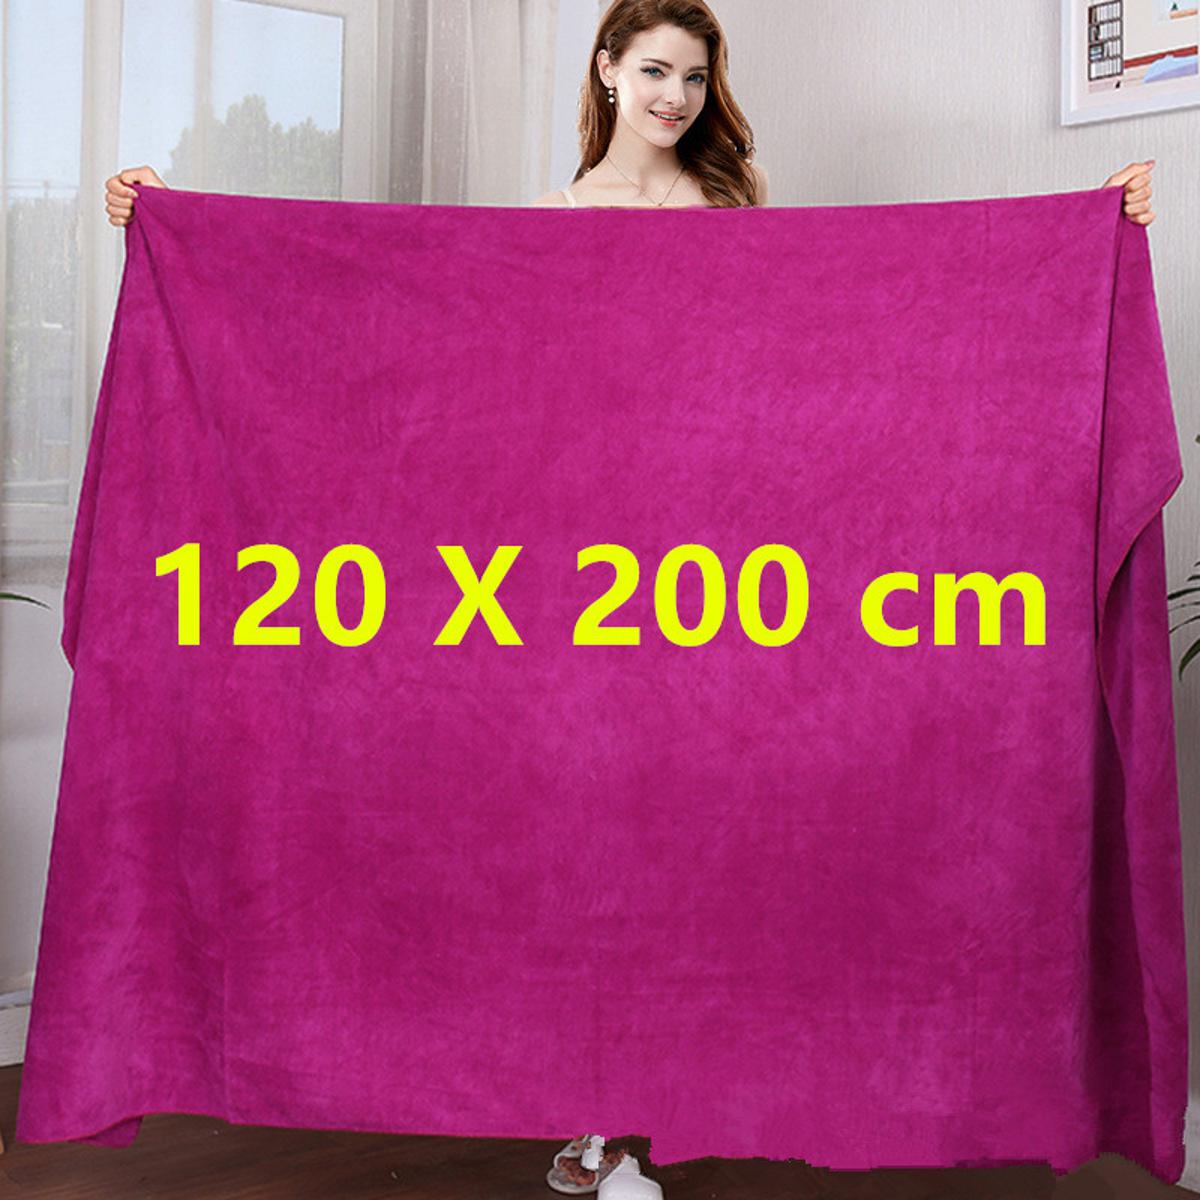 120X200cm bath towel, extra-large microfiber bath towel, thick